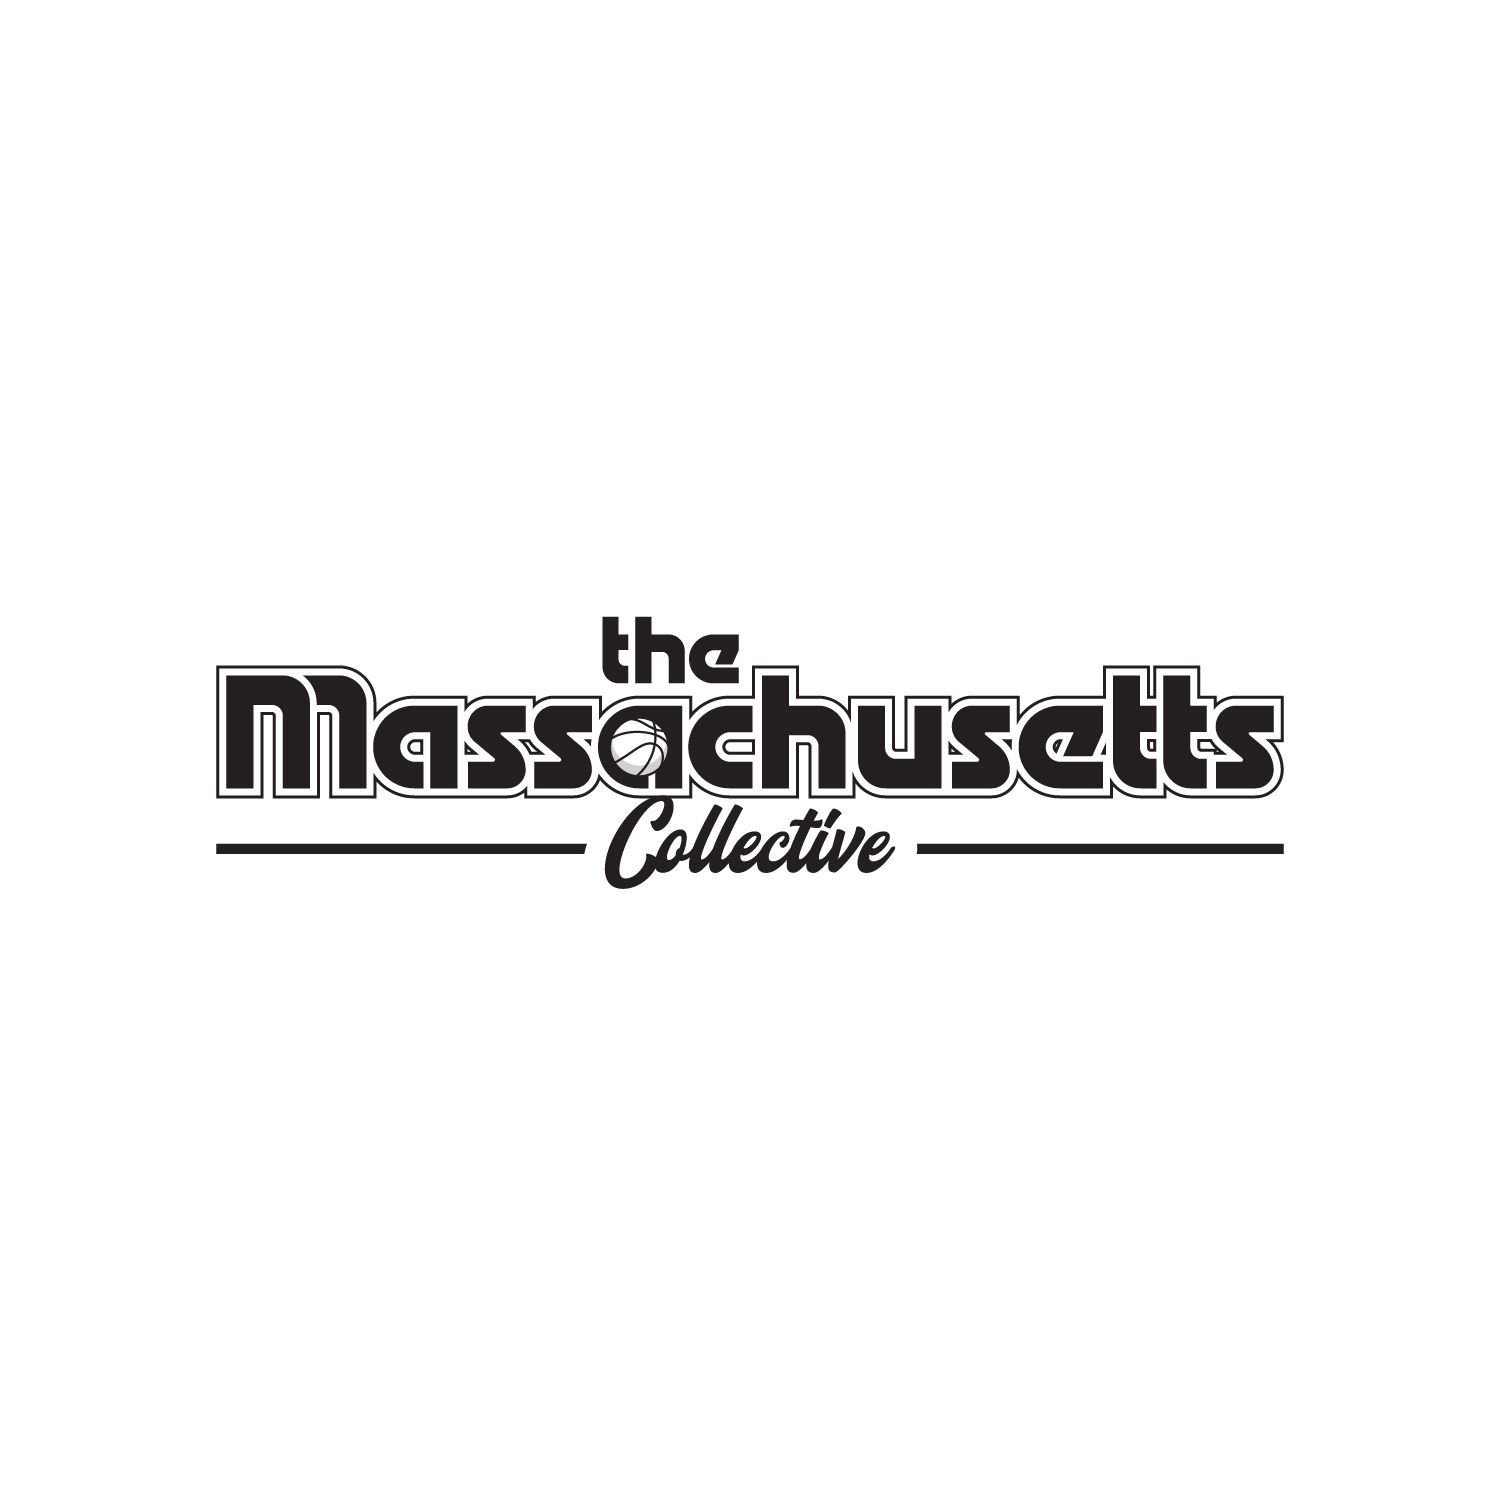 The Massachusetts Collective